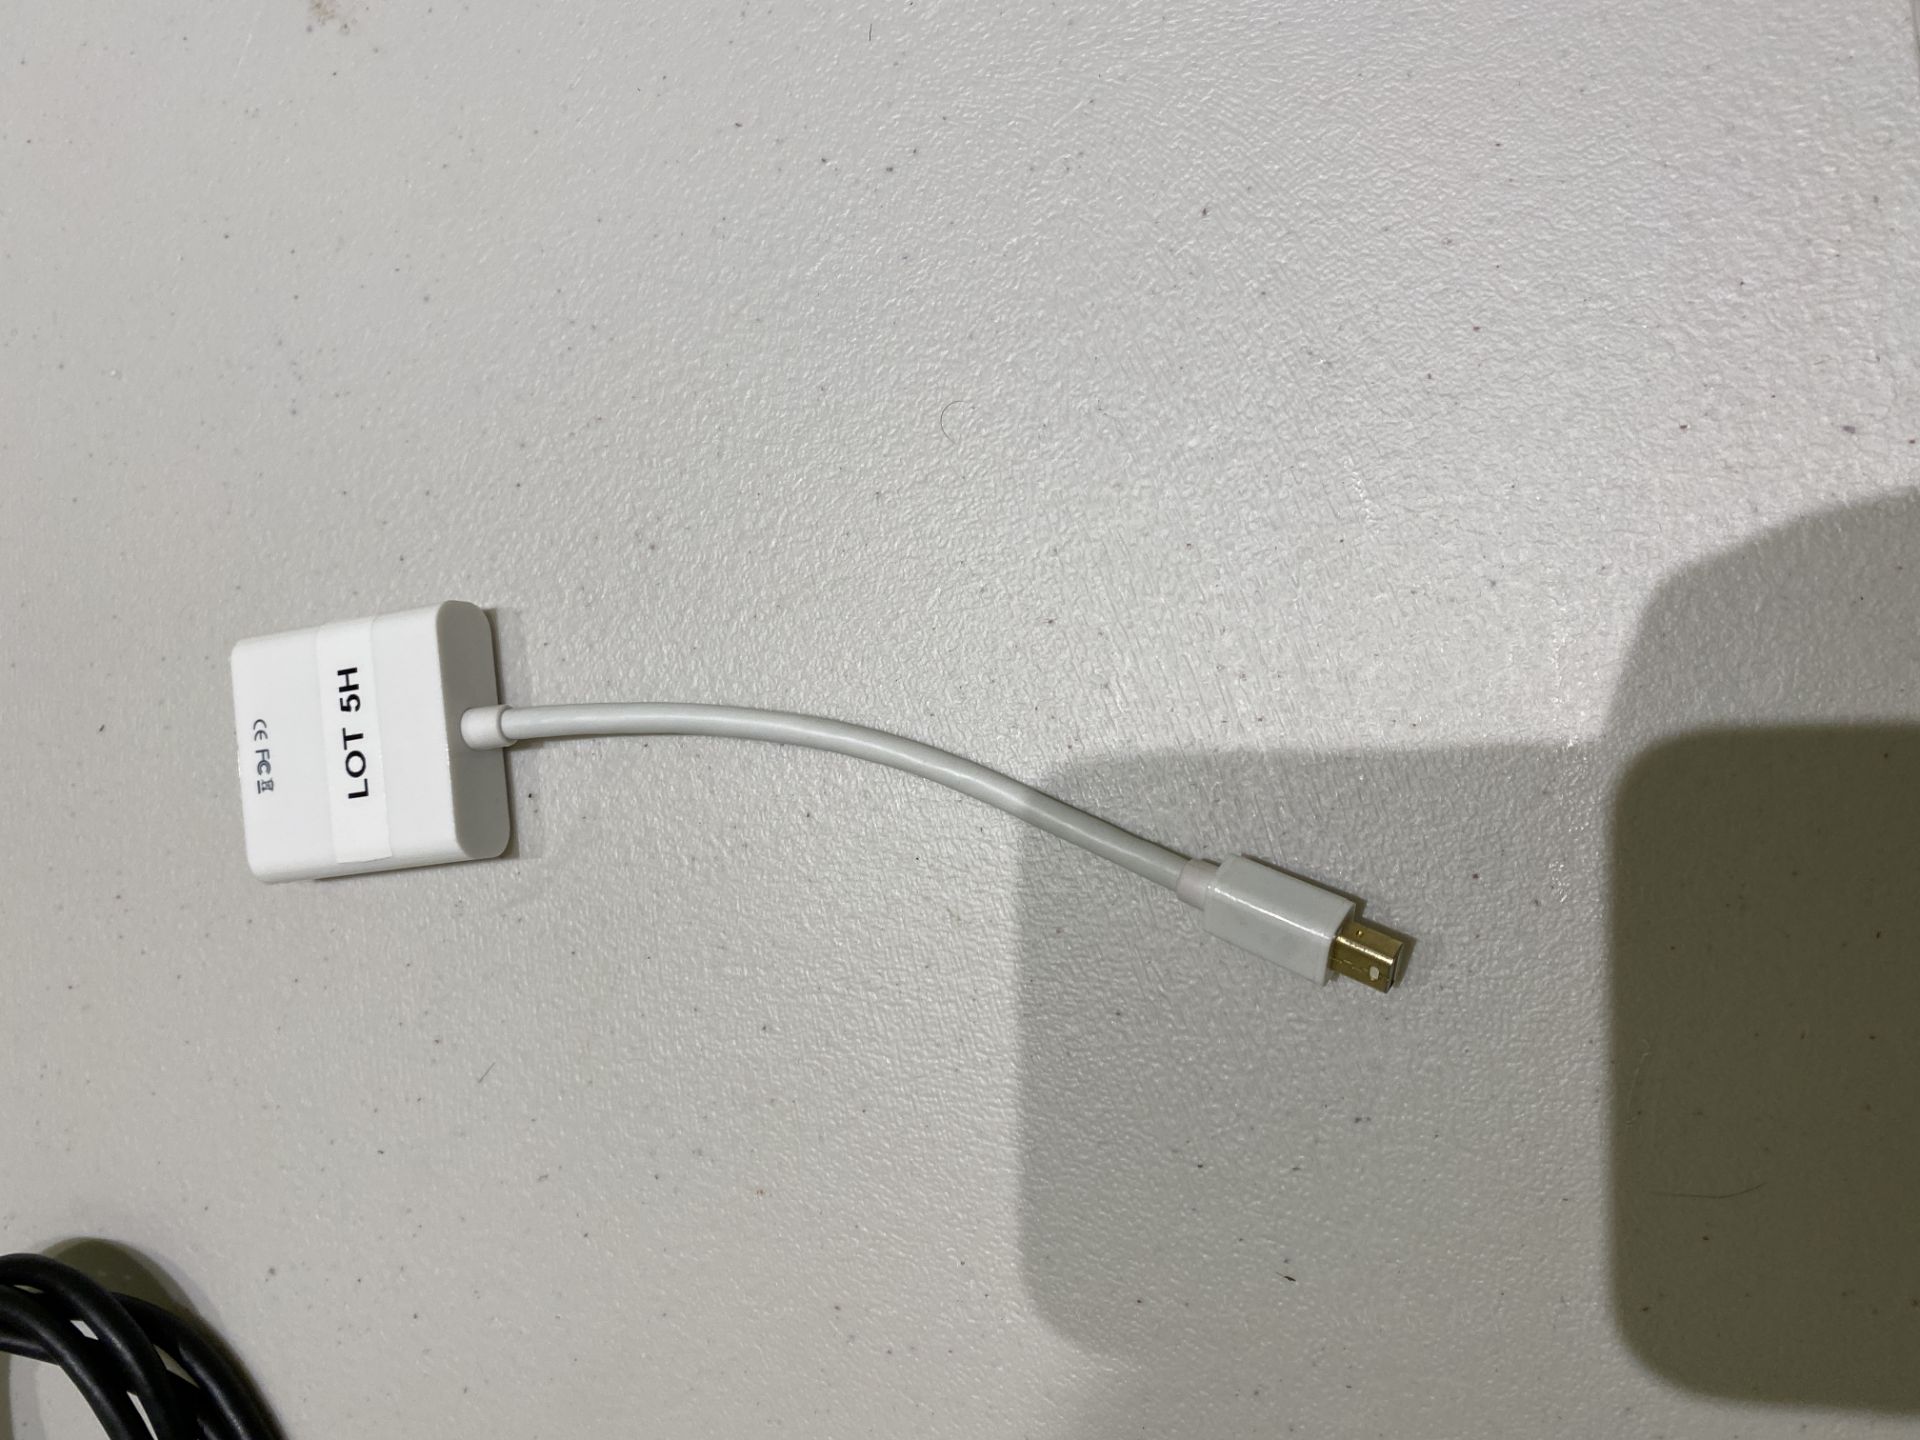 Apple Mini Display Port DP to VGA Adapter Converter with VGA Cable and Apple Mini Display Port DP to - Image 3 of 12